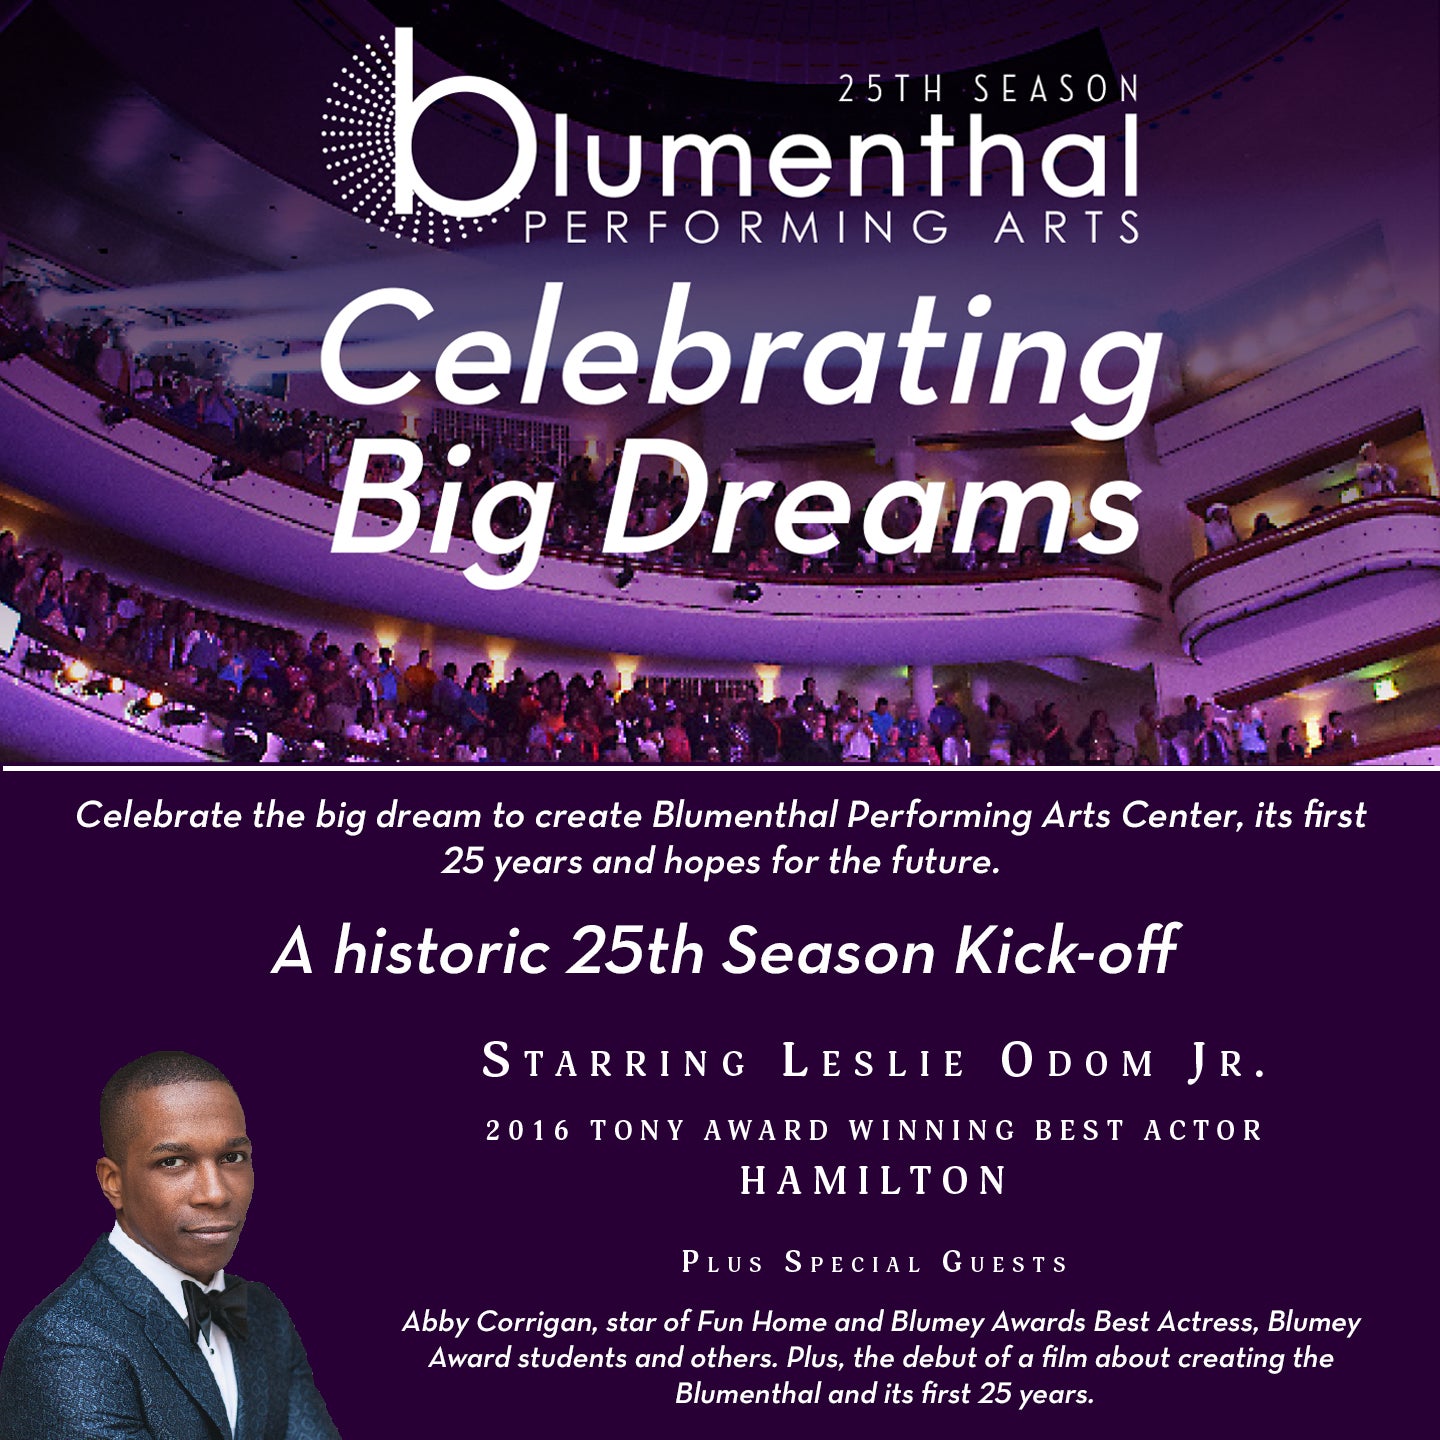 Celebrating Big Dreams: Starring Leslie Odom Jr. and Special Guests